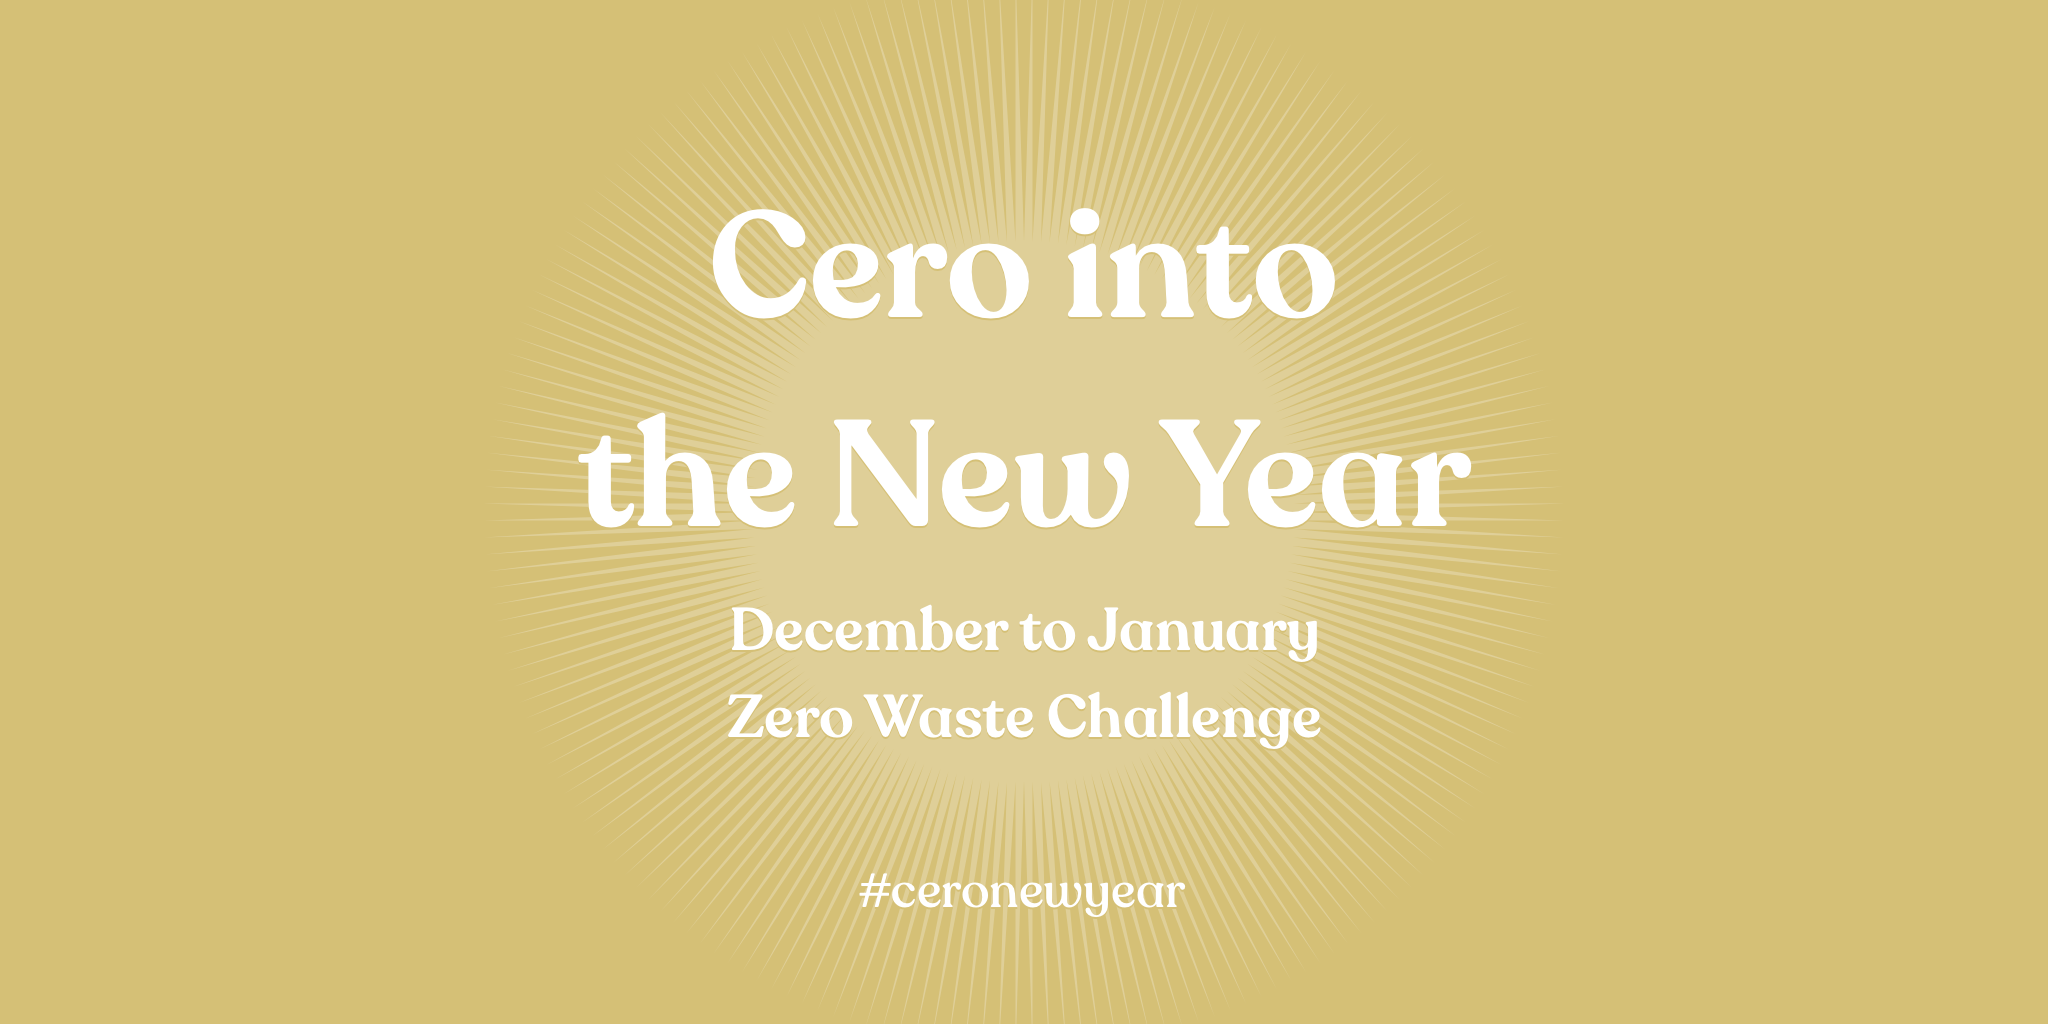 Cero New Year